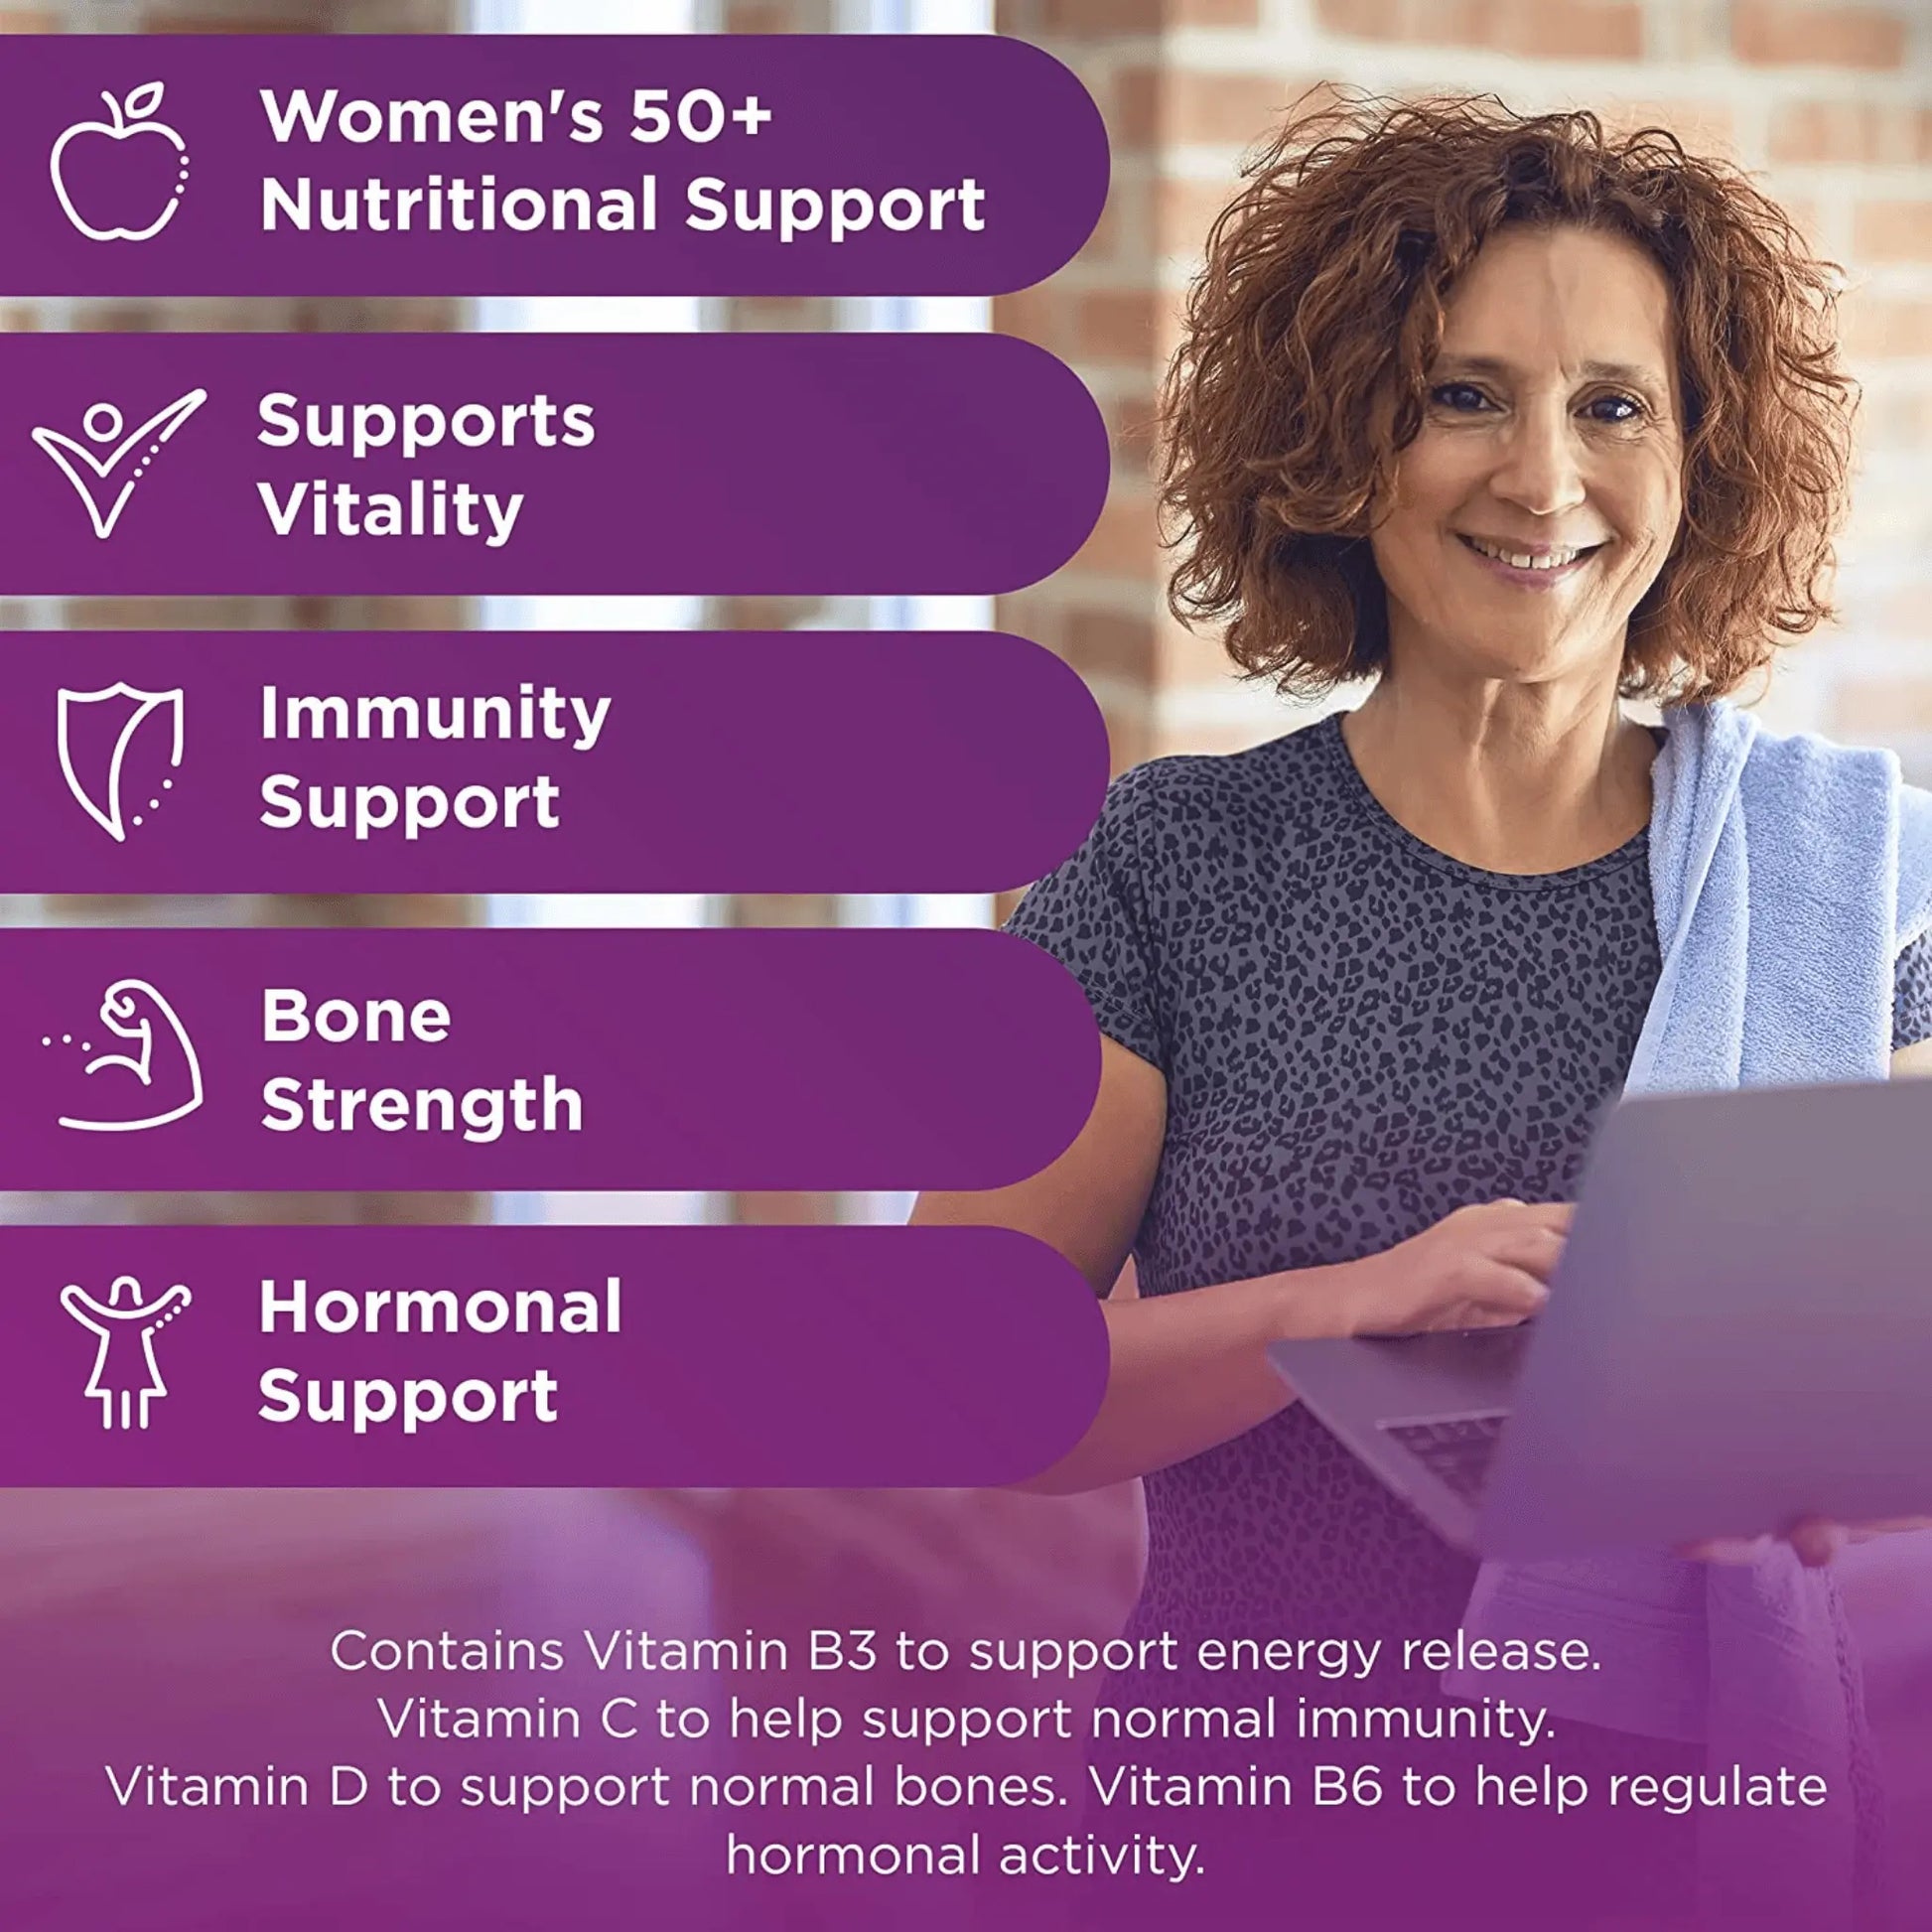 Centrum 50+ Womens 30 Tablets - Arc Health Nutrition